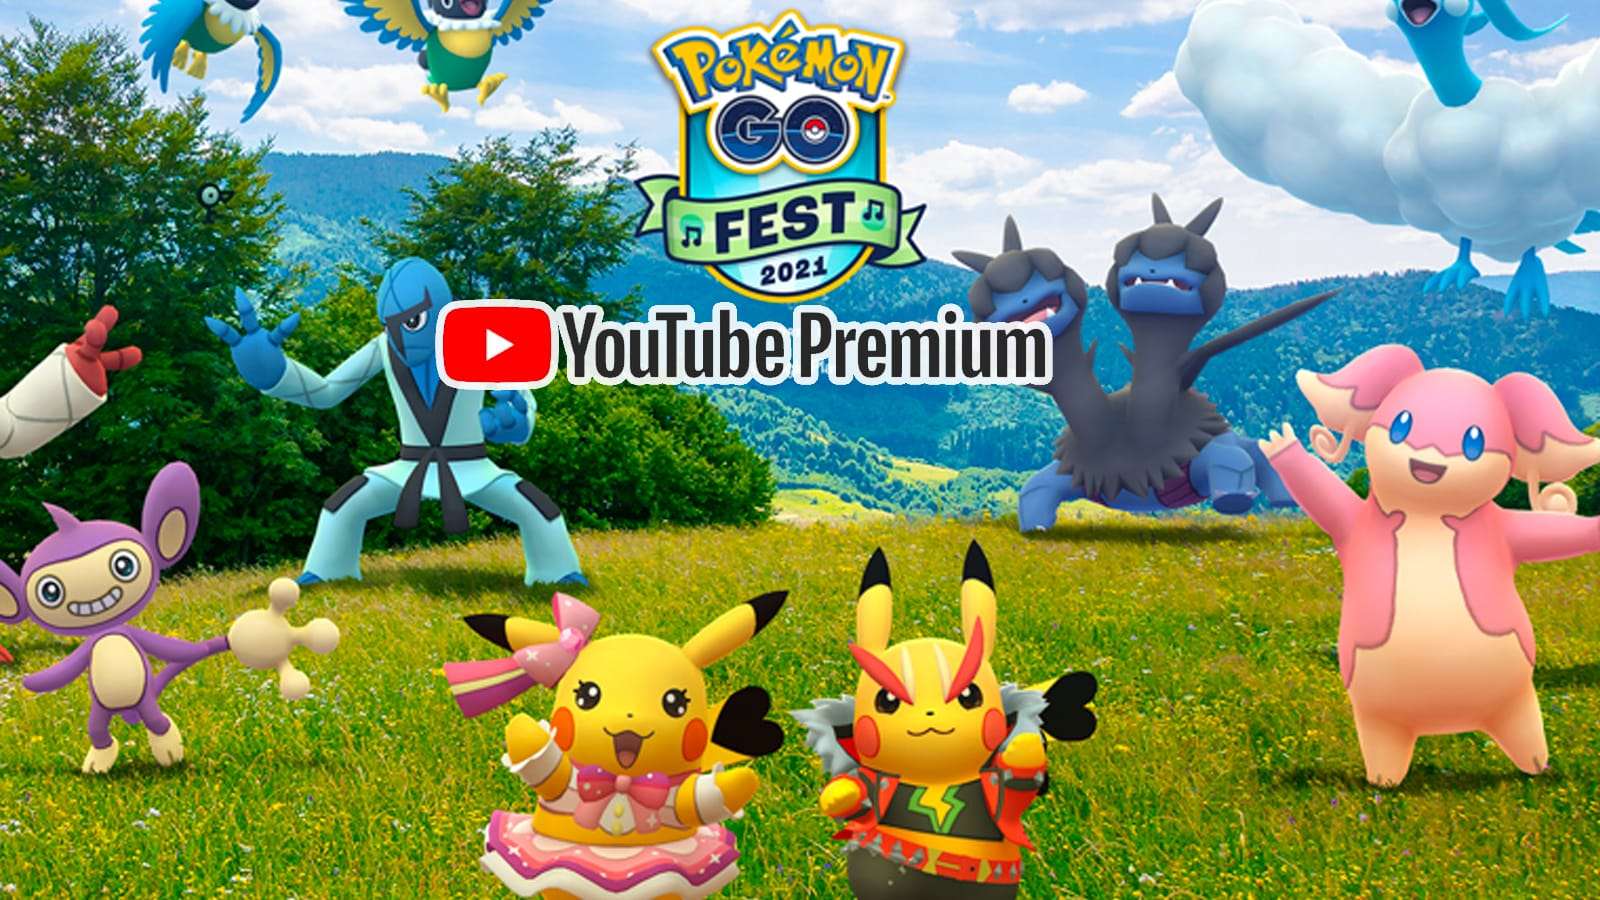 Pokemon Go Fest 2021 YouTube Premium